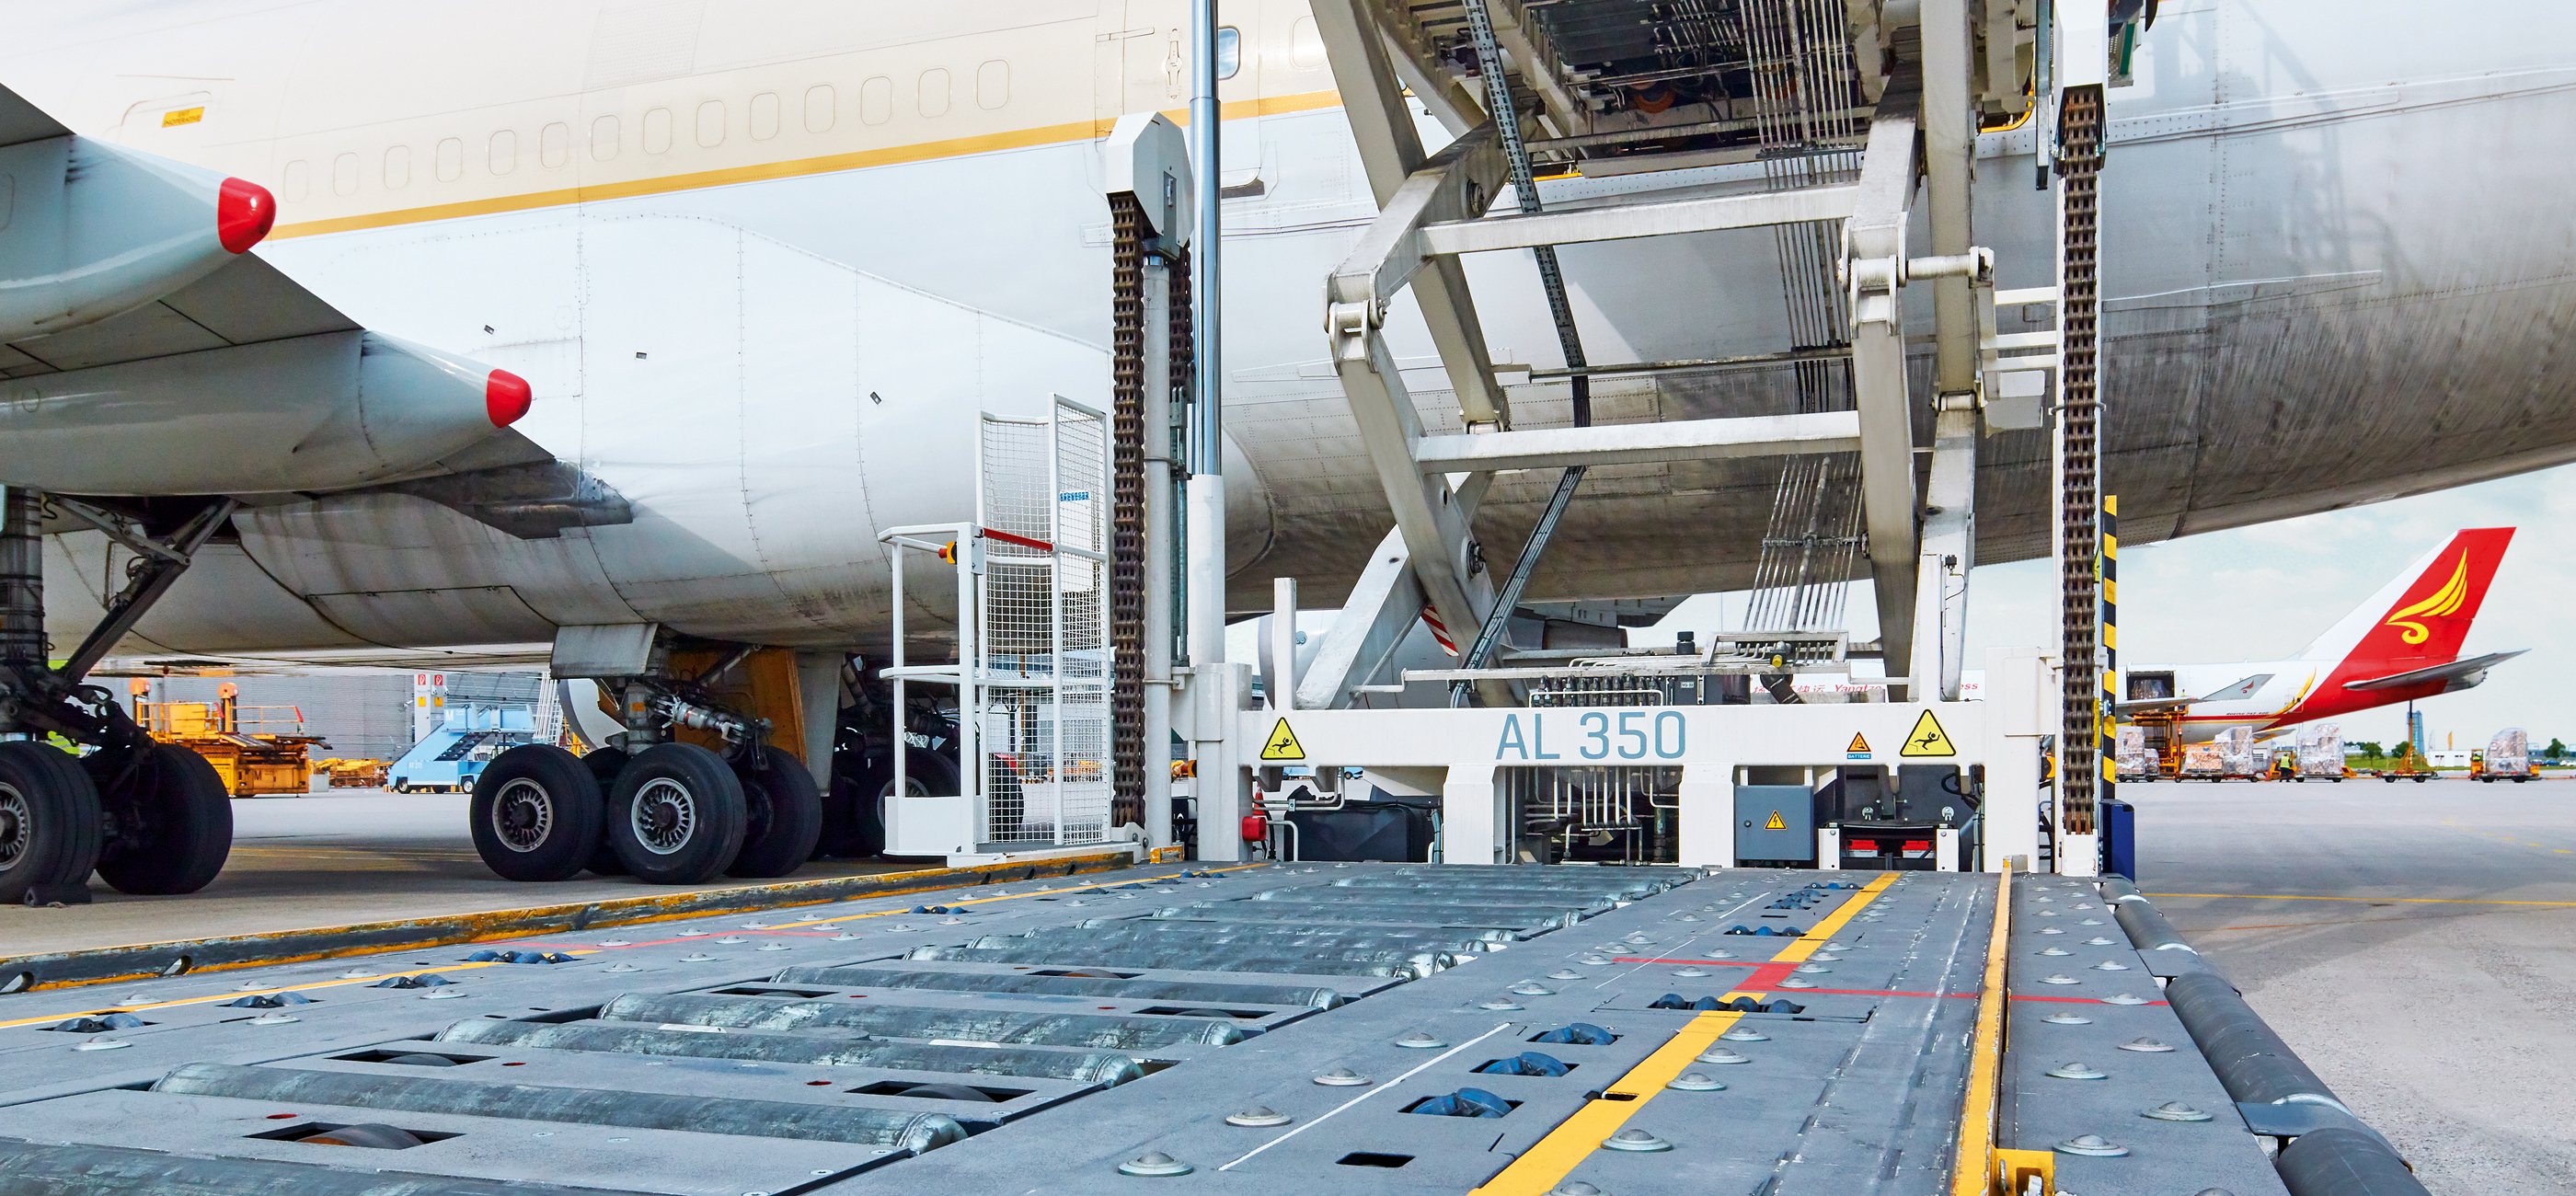 TREPEL Airport Equipment - Cargo High Loader